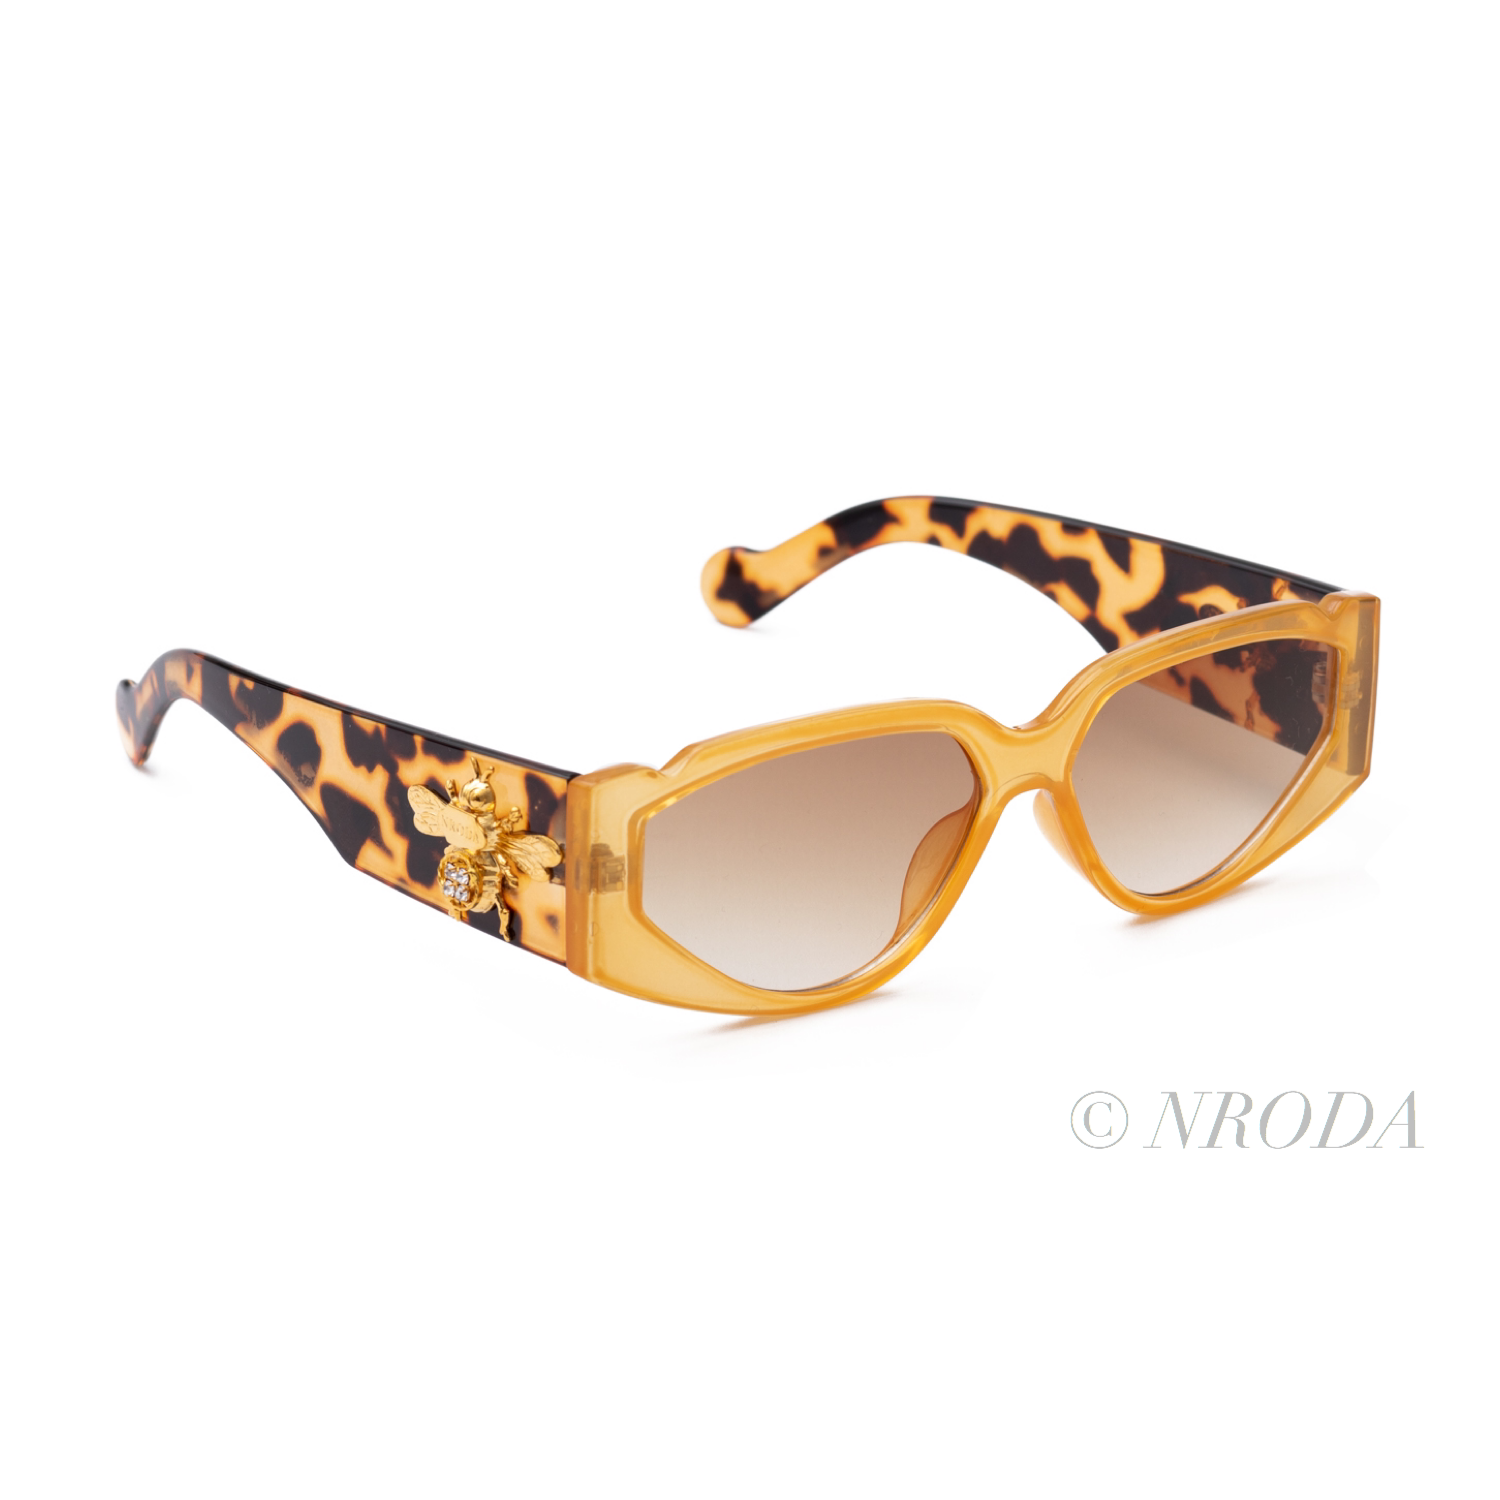 Nroda Gianni Love Bee - Gemstone edition Citrine Eyewear Sunglasses Collection, Tnemnroda man- NRODA